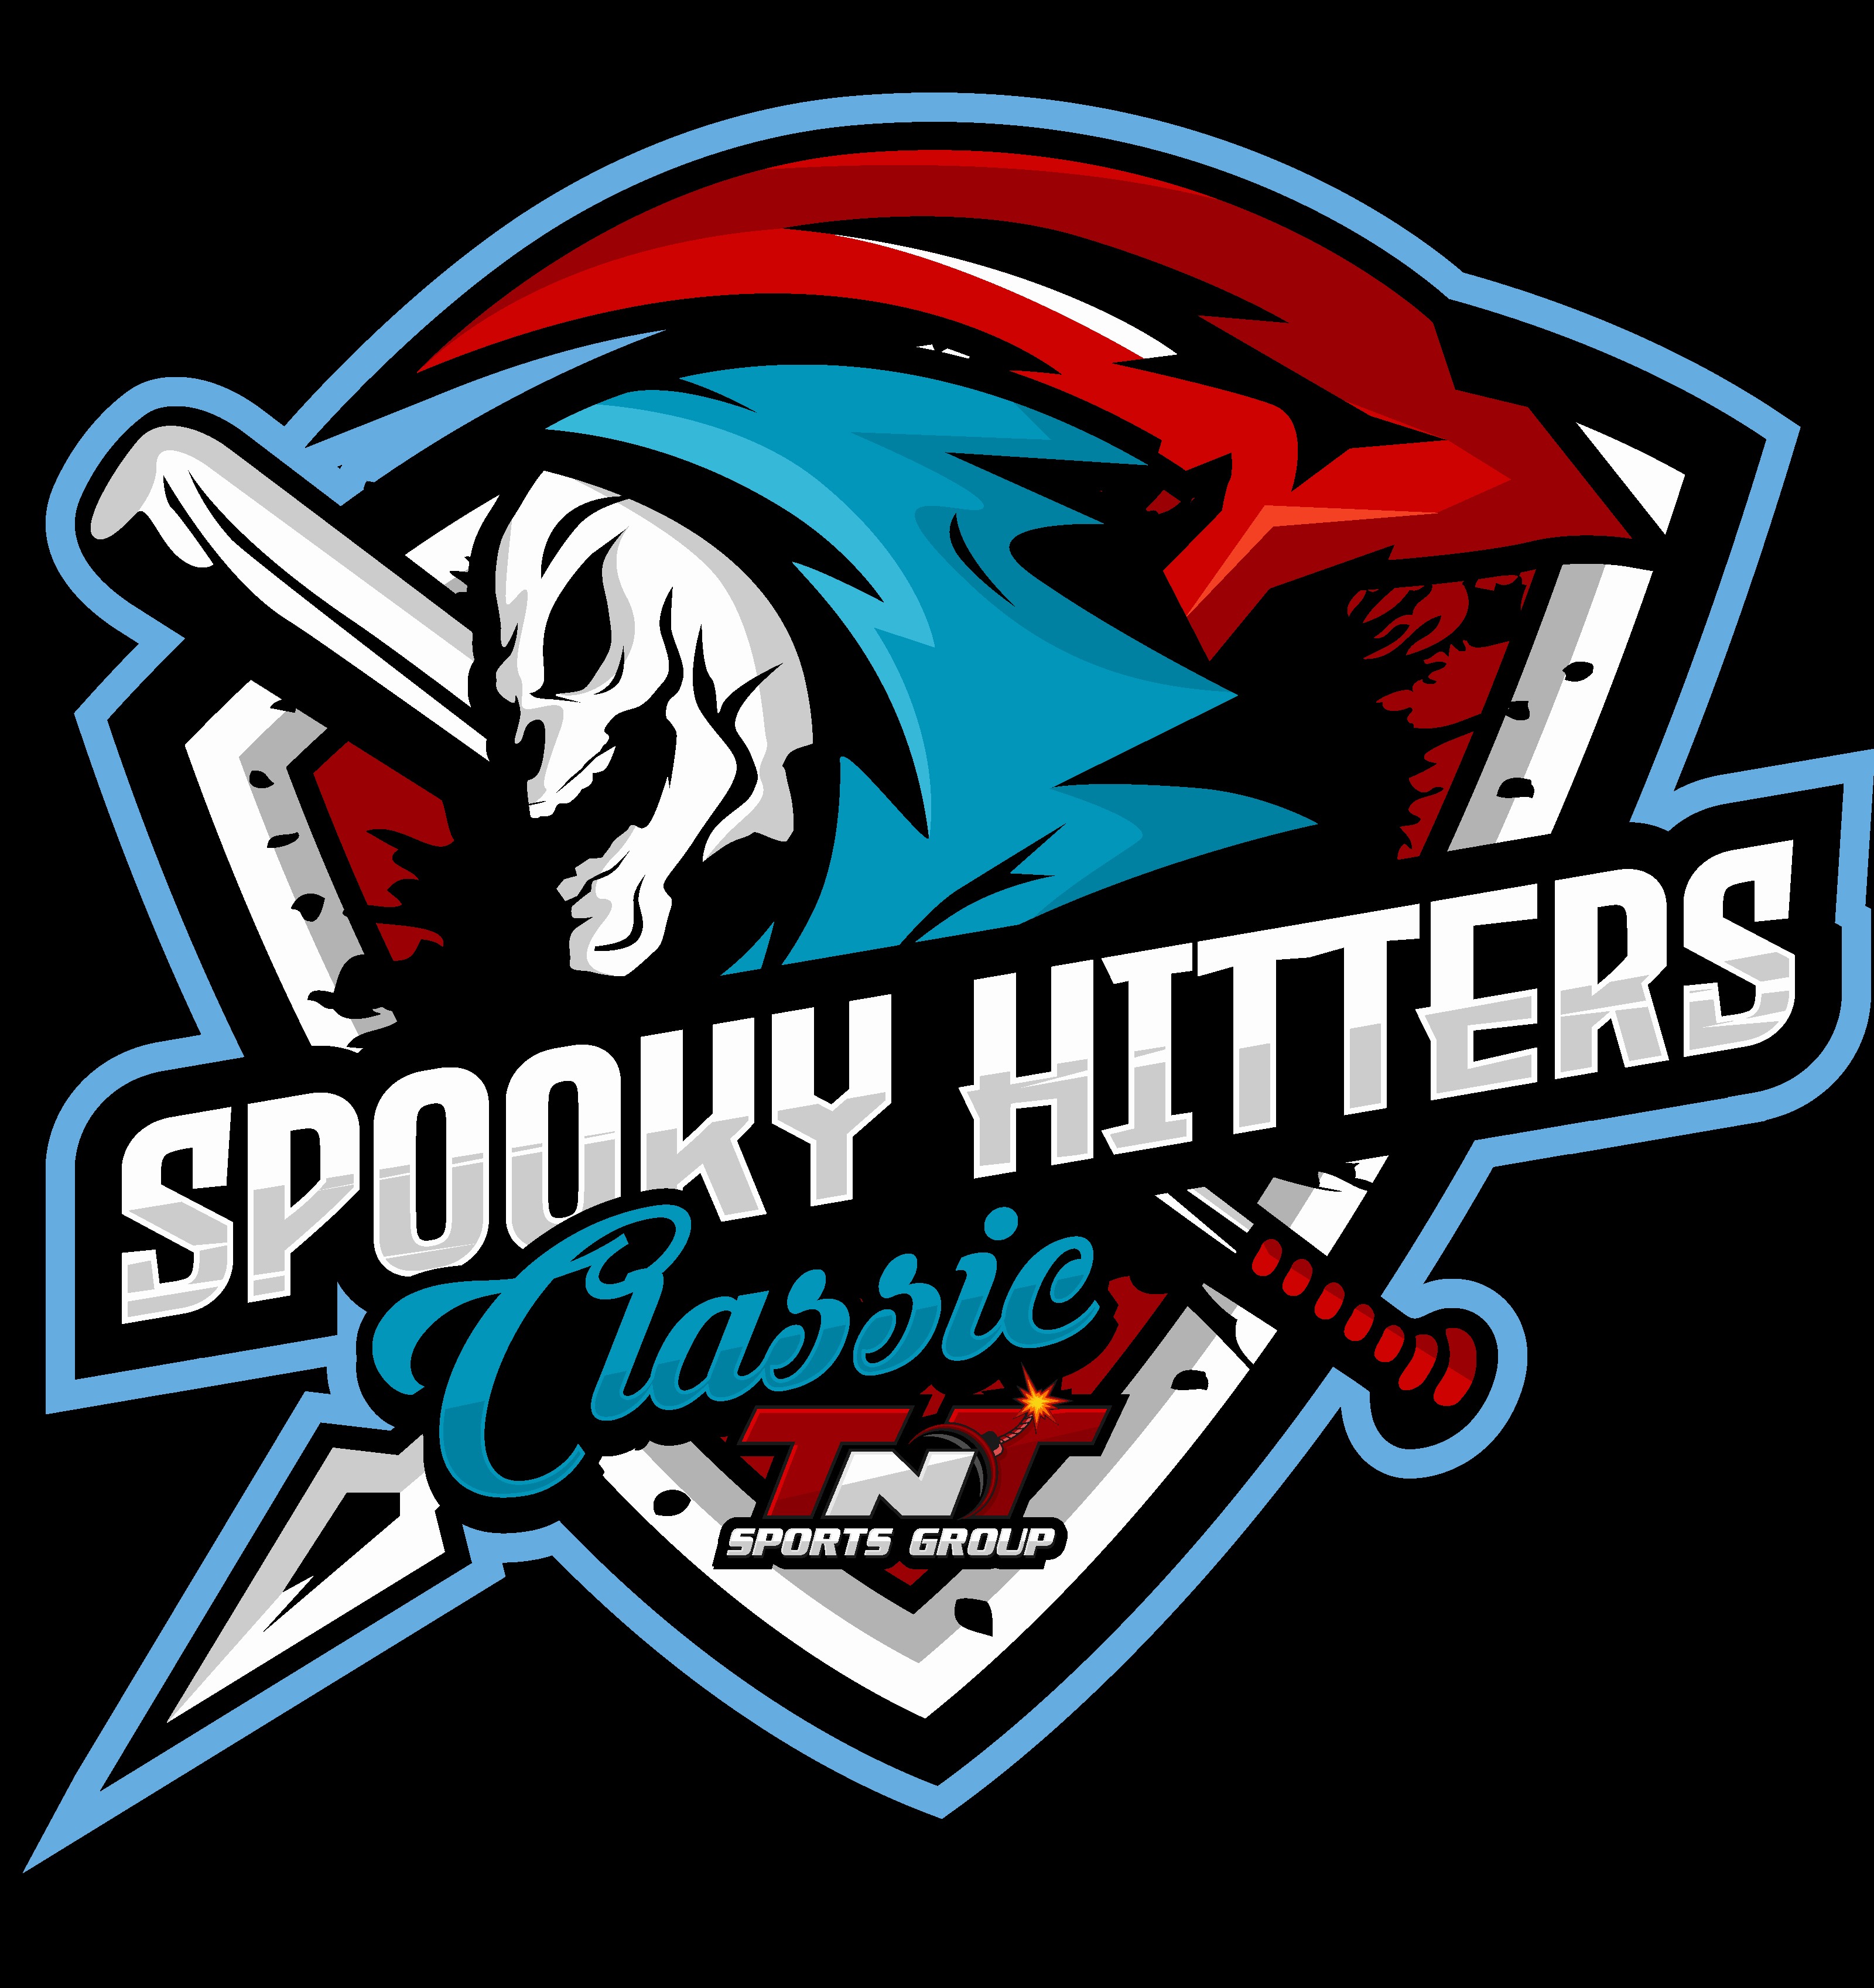 TNT Sports Group Spooky Hitters